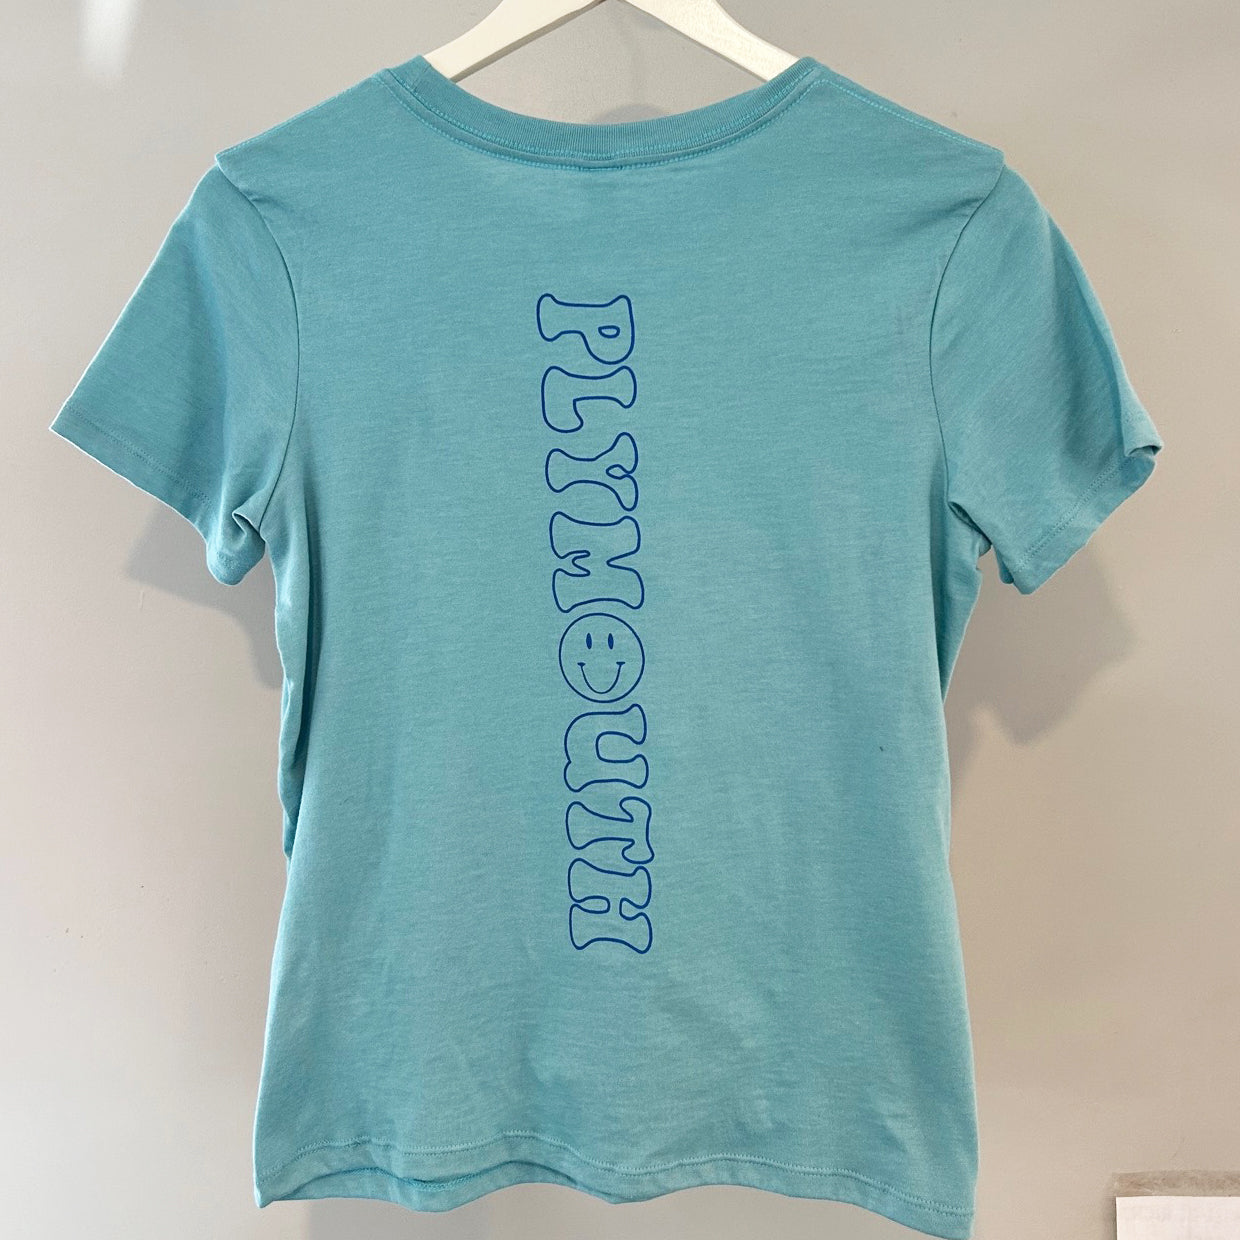 Plymouth Groovy Womens T-Shirt - Aqua